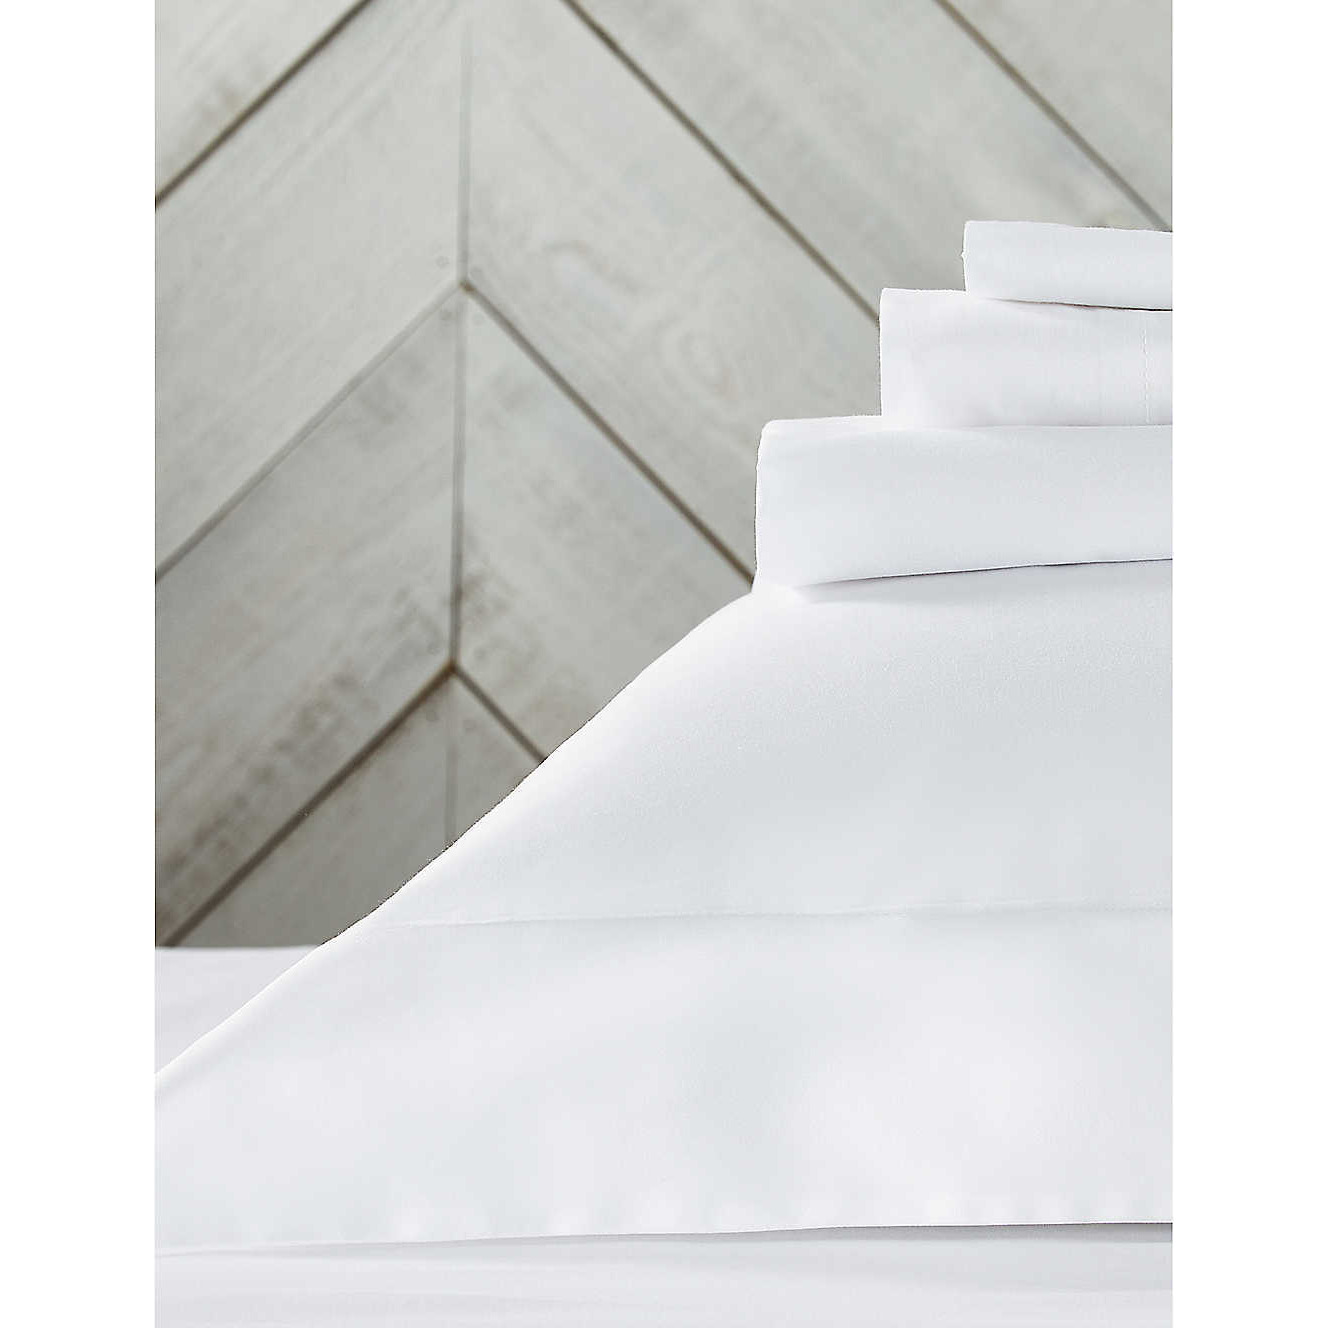 The Company White Egyptian Cotton Sateen Flat Sheet, Size: Single - image 1